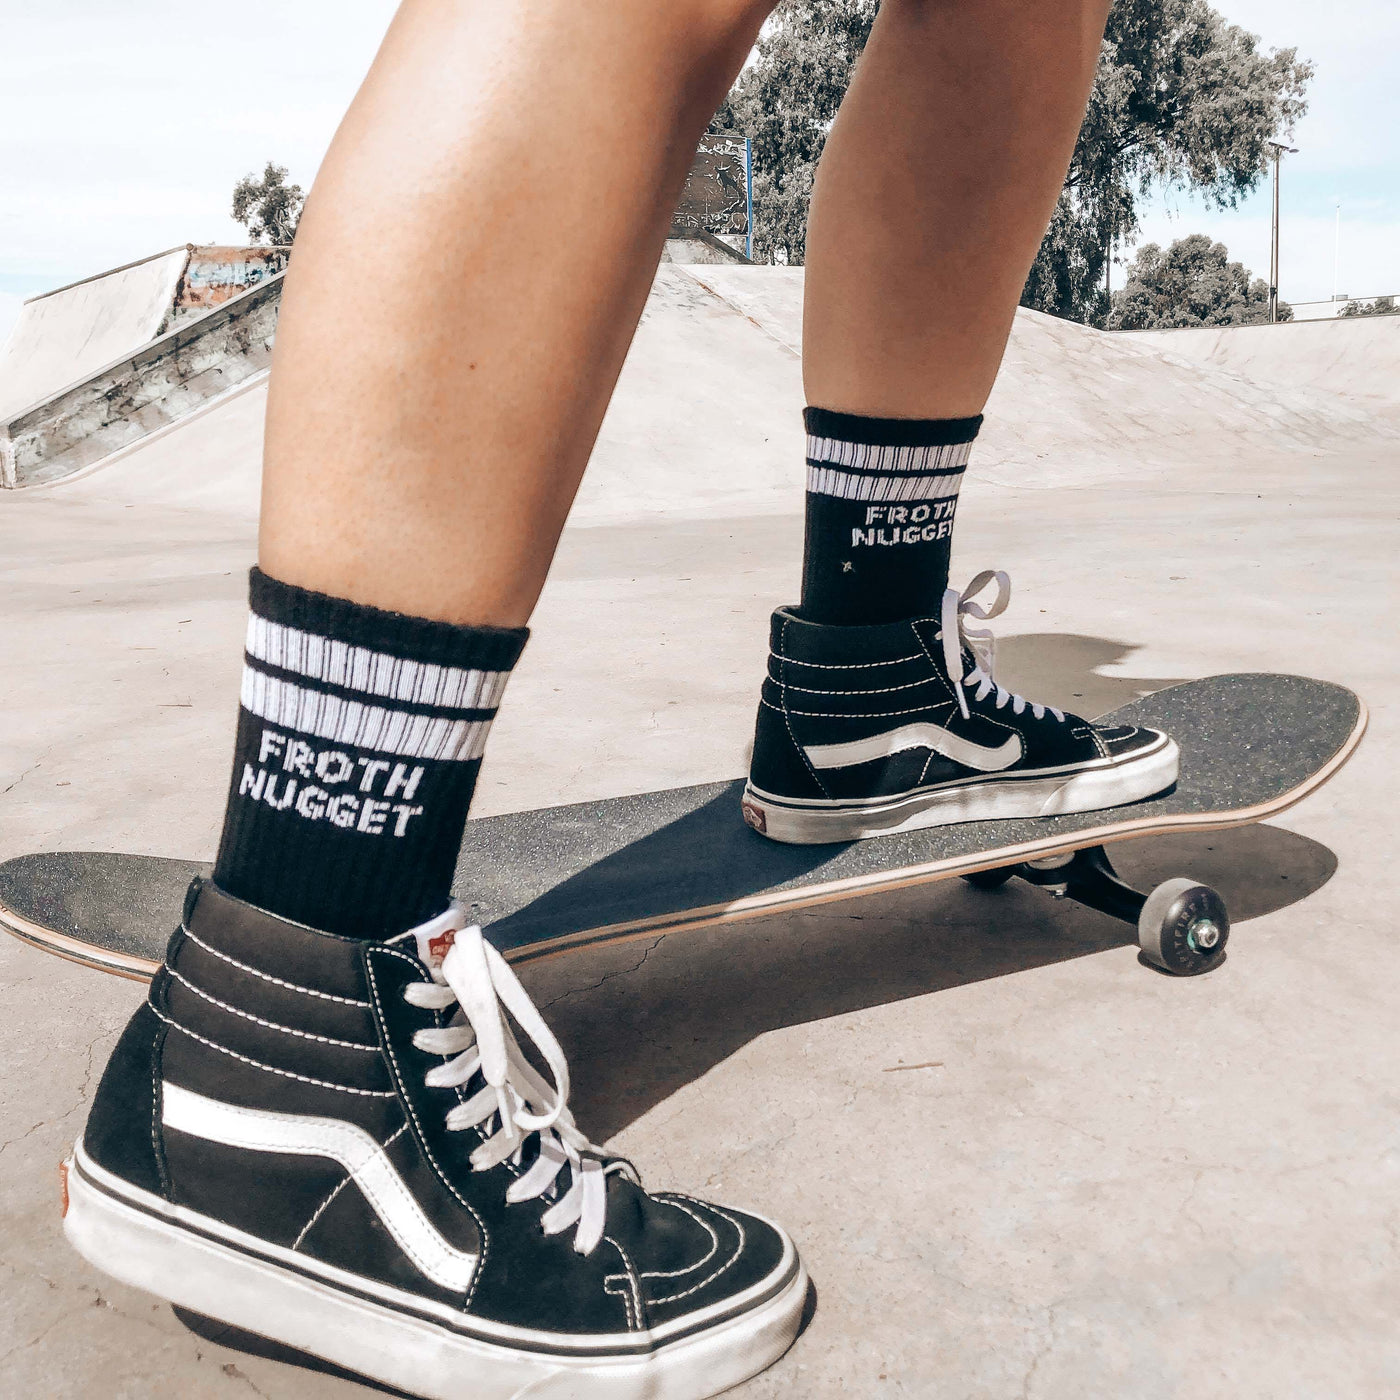 Black Sport Stripe Socks | Best Stripe Socks | Froth Nugget